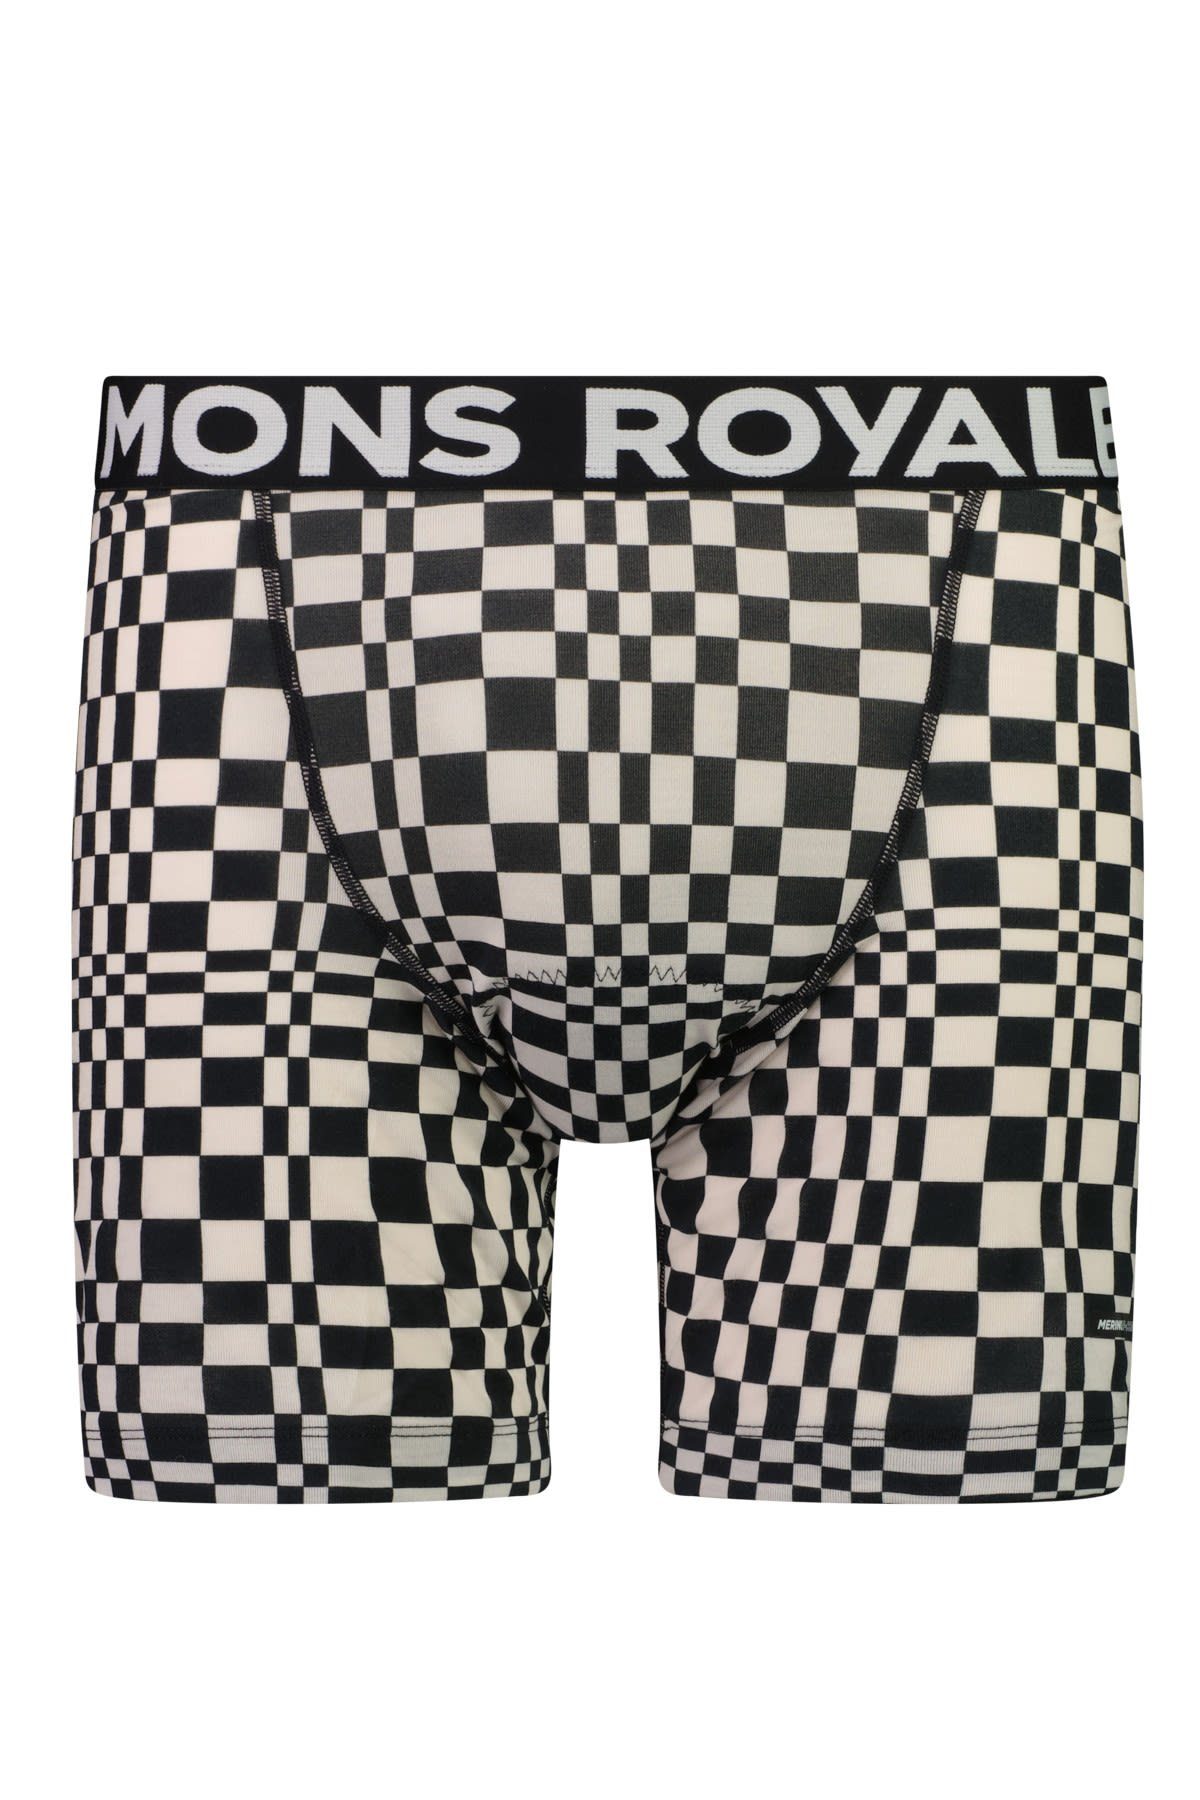 Mons Royale Lange Unterhose Checkers